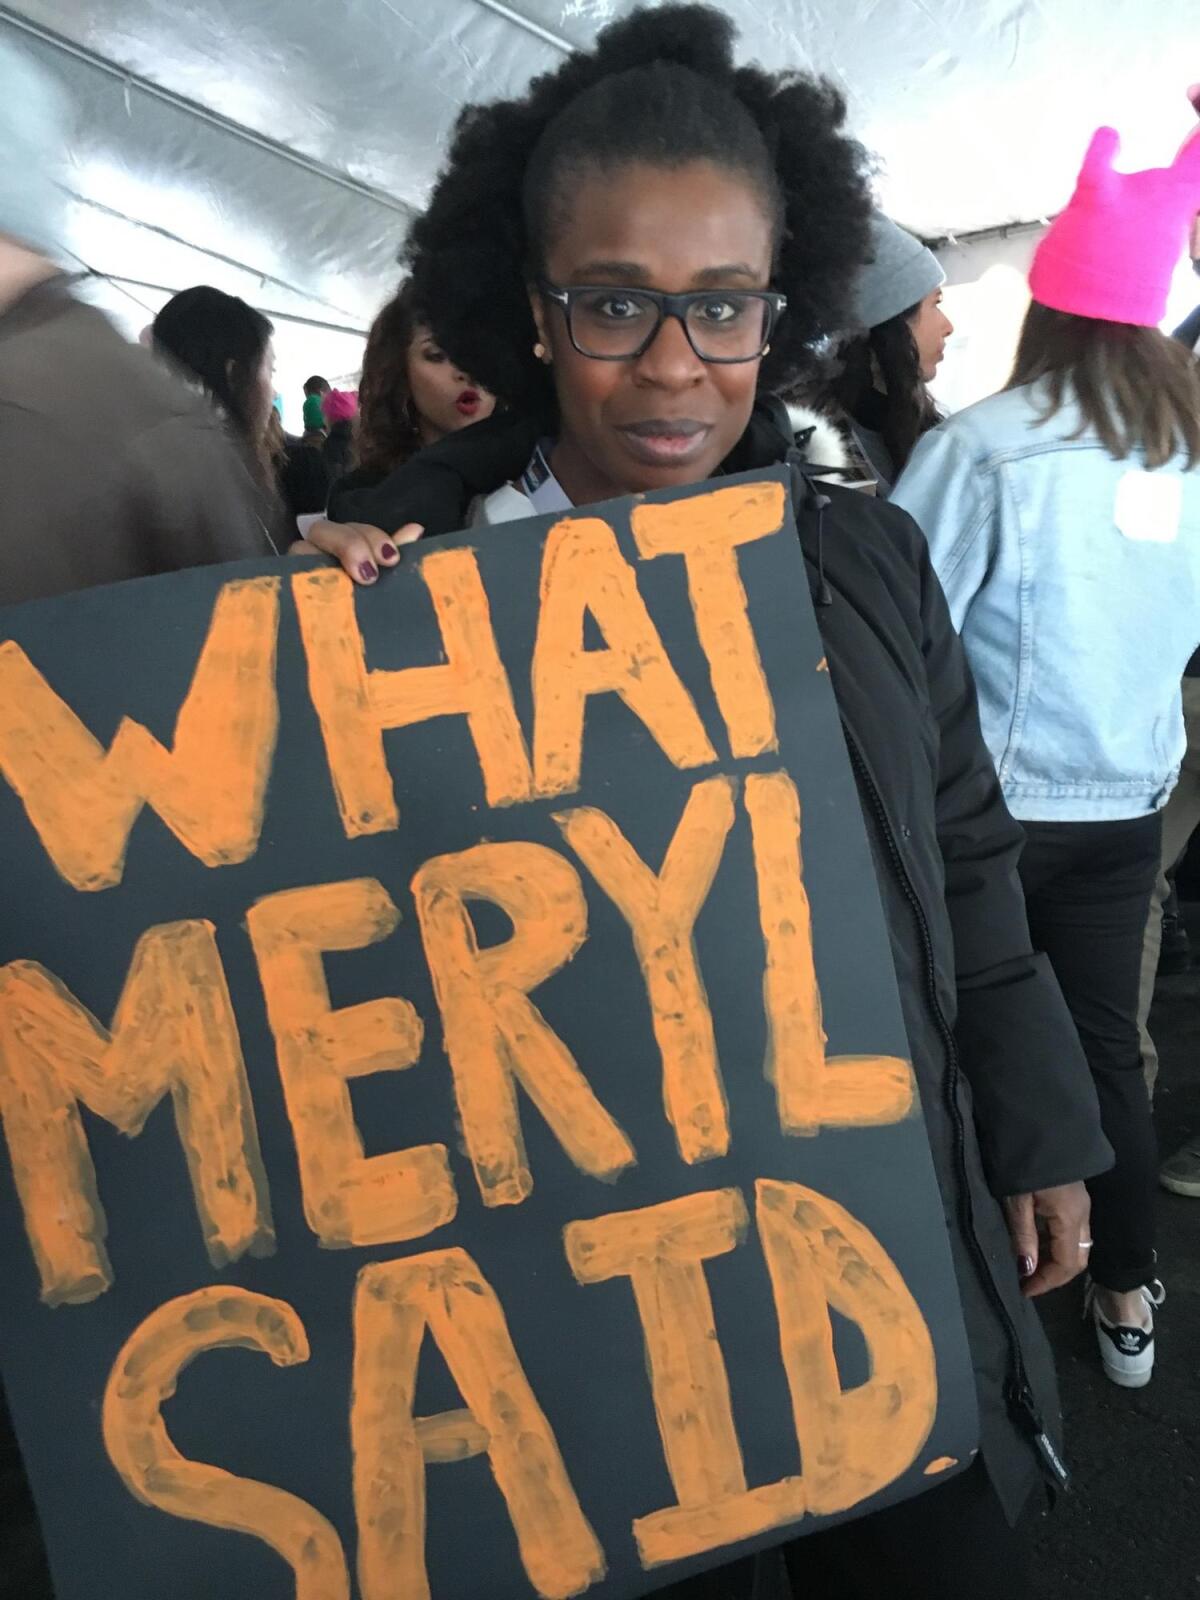 Uzo Aduba holding the "What Meryl said" sign